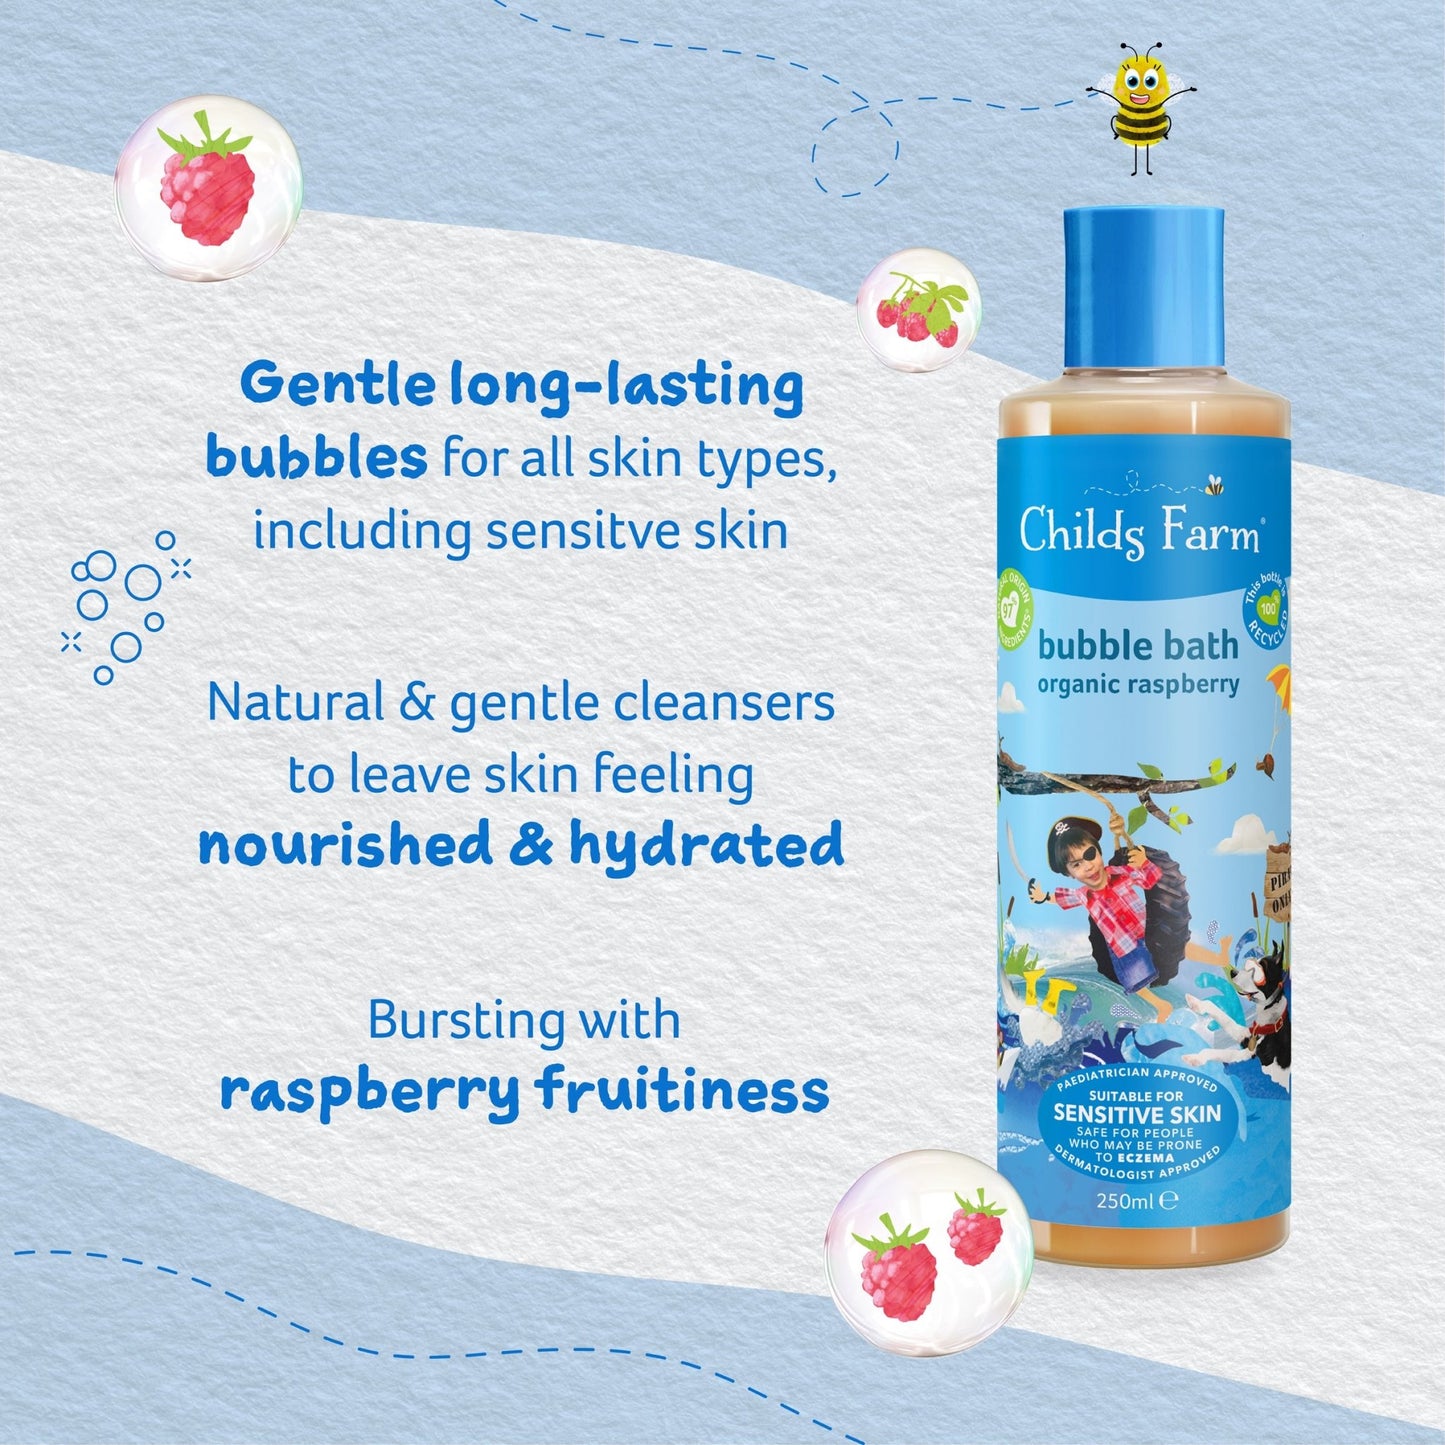 [STAFF] bubble bath organic raspberry